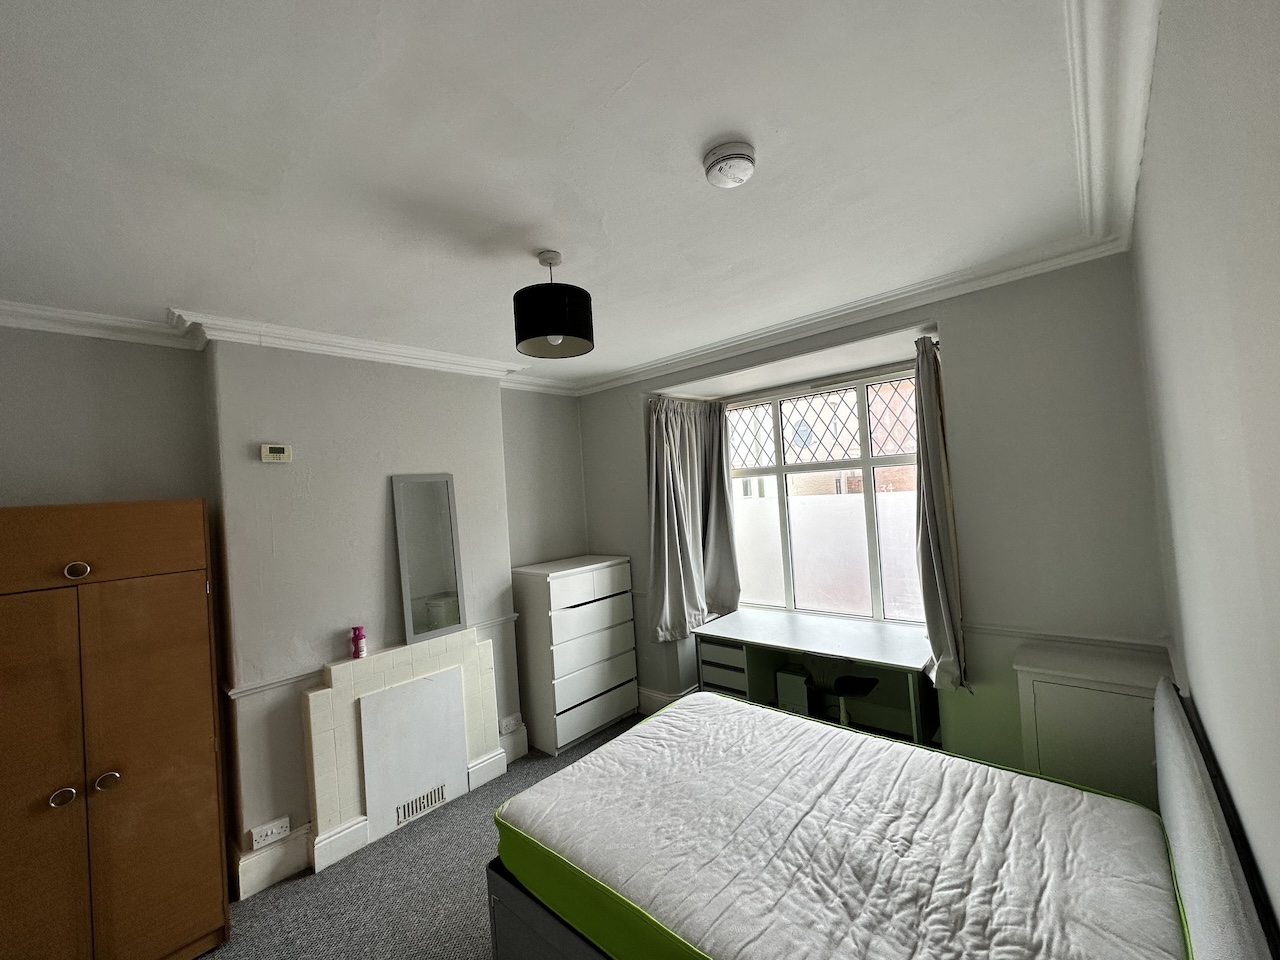 41 St Pauls Road, Gloucester, GL1 5AR, 4 Bedrooms Bedrooms, ,1 BathroomBathrooms,Student,For Rent,St Pauls Road,1031